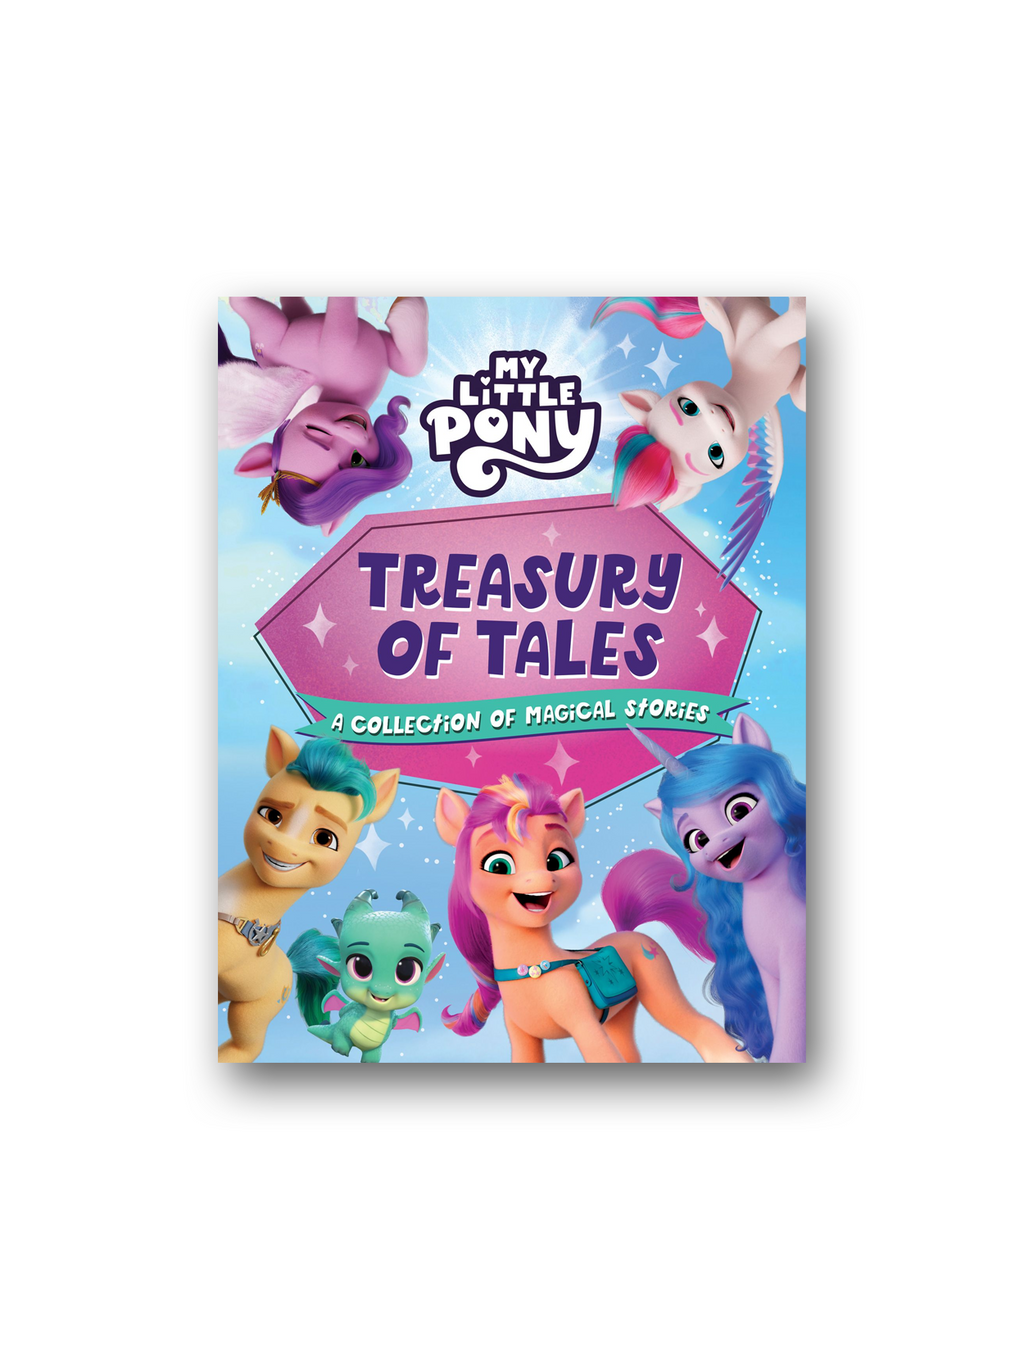 My Little Pony: Treasury of Tales